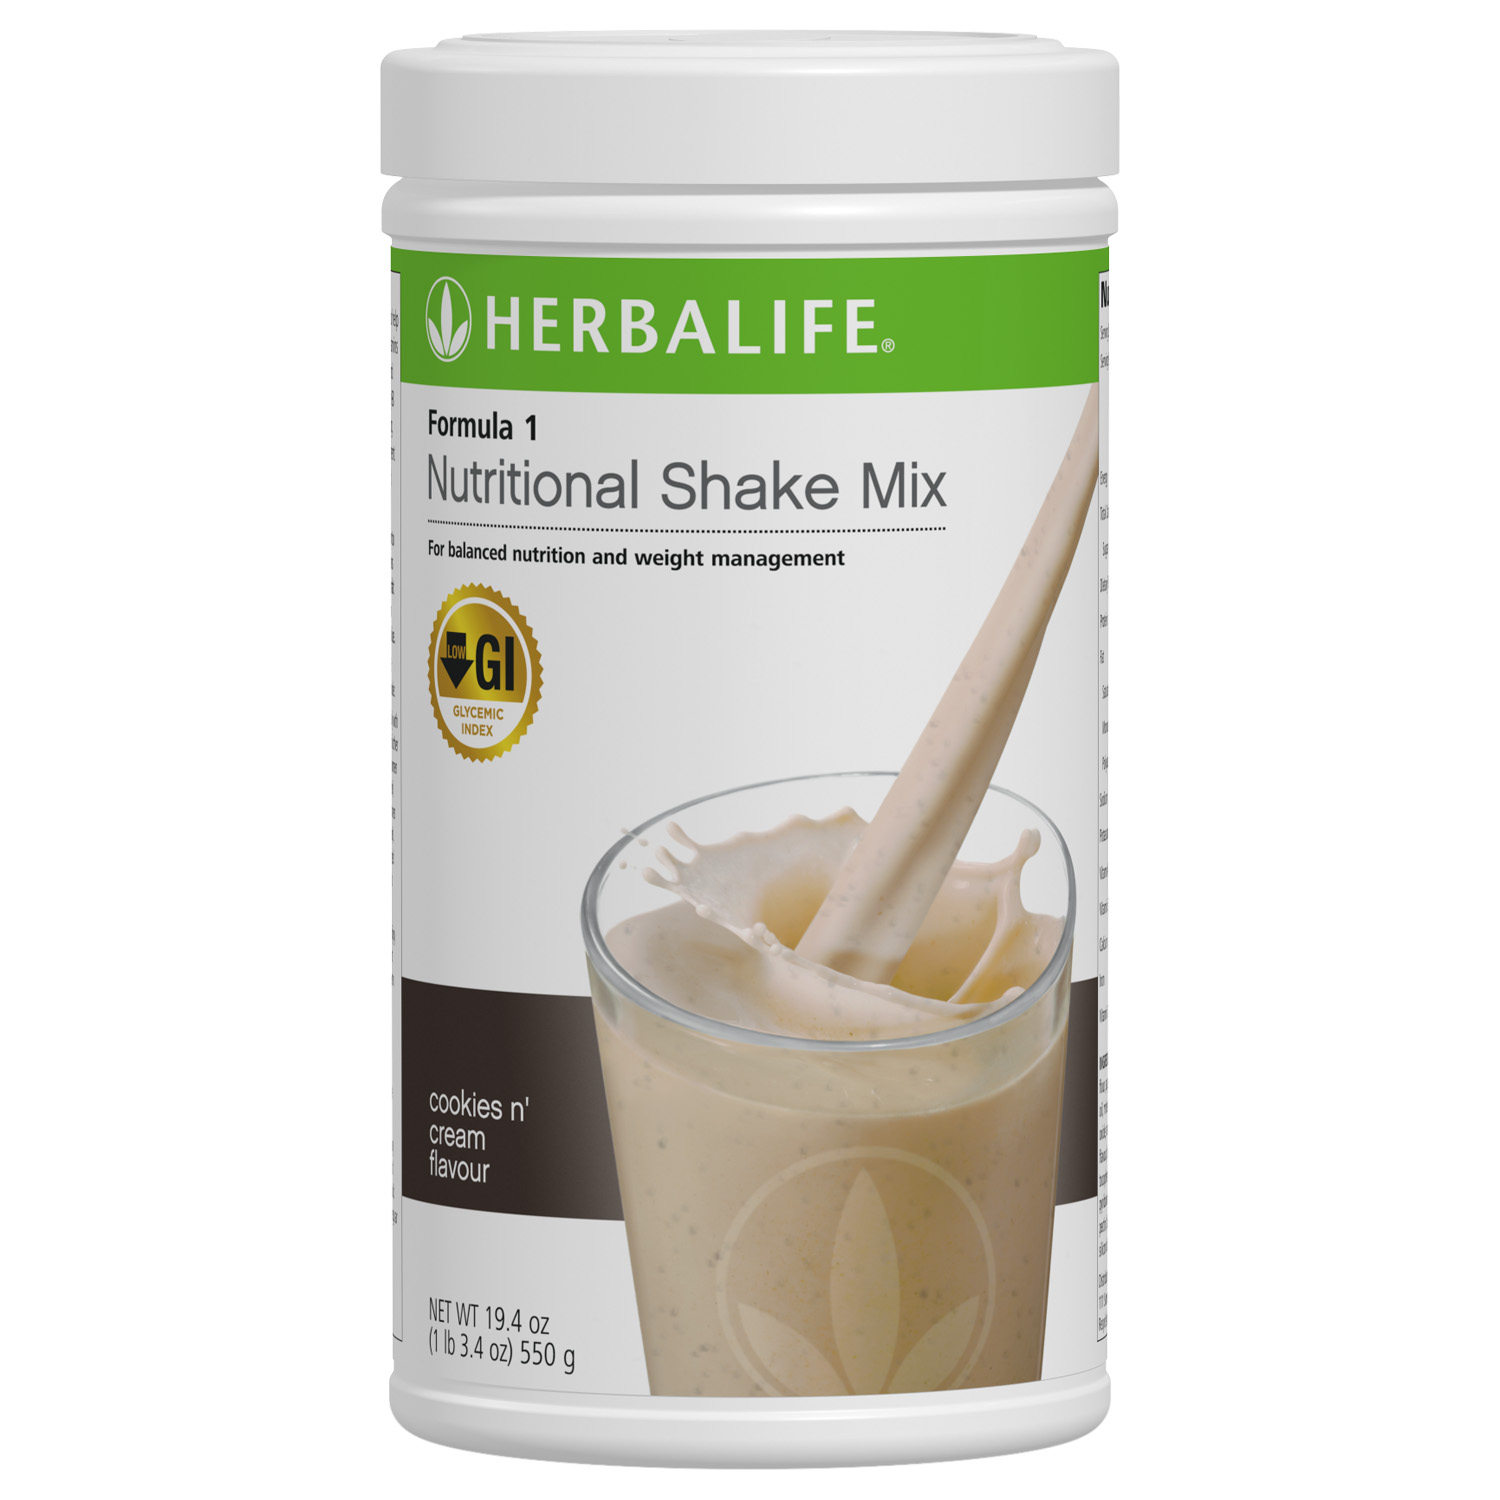 0146 Herbalife Nutrition Formula 1 Nutritional Shake Mix Cookies n' Cream Protein